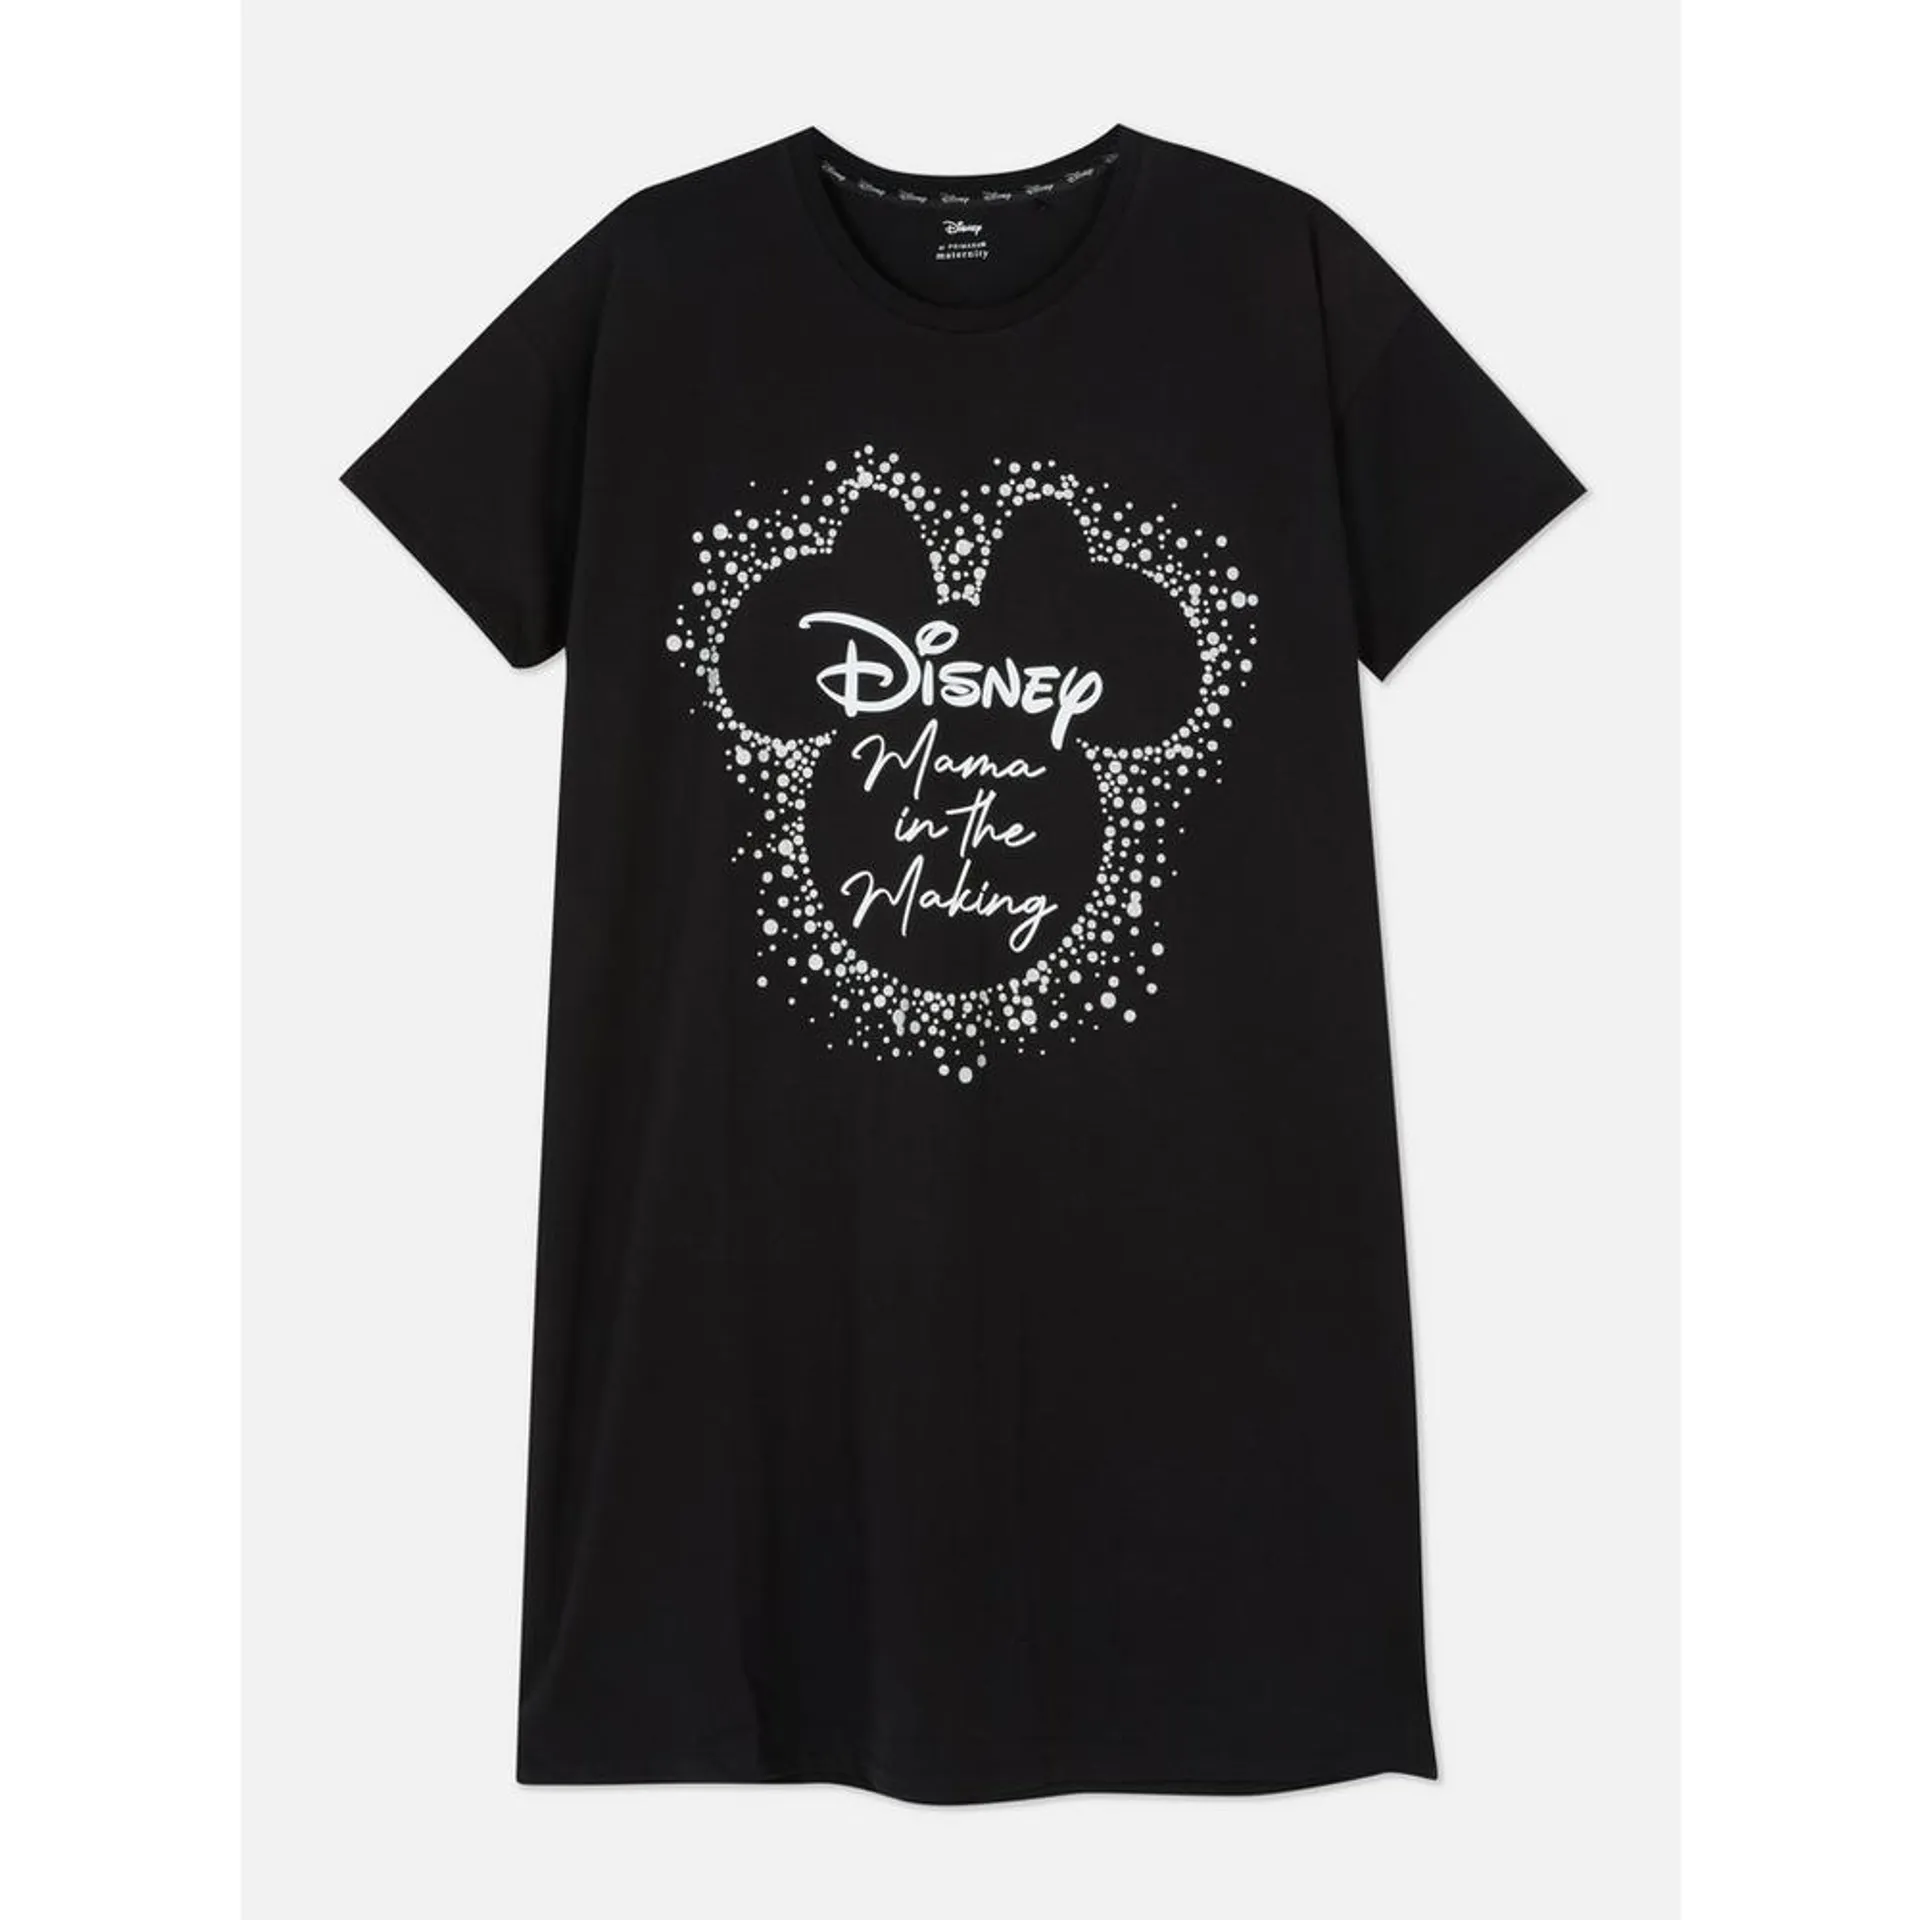 Camiseta de pijama de premamá de Minnie Mouse de Disney